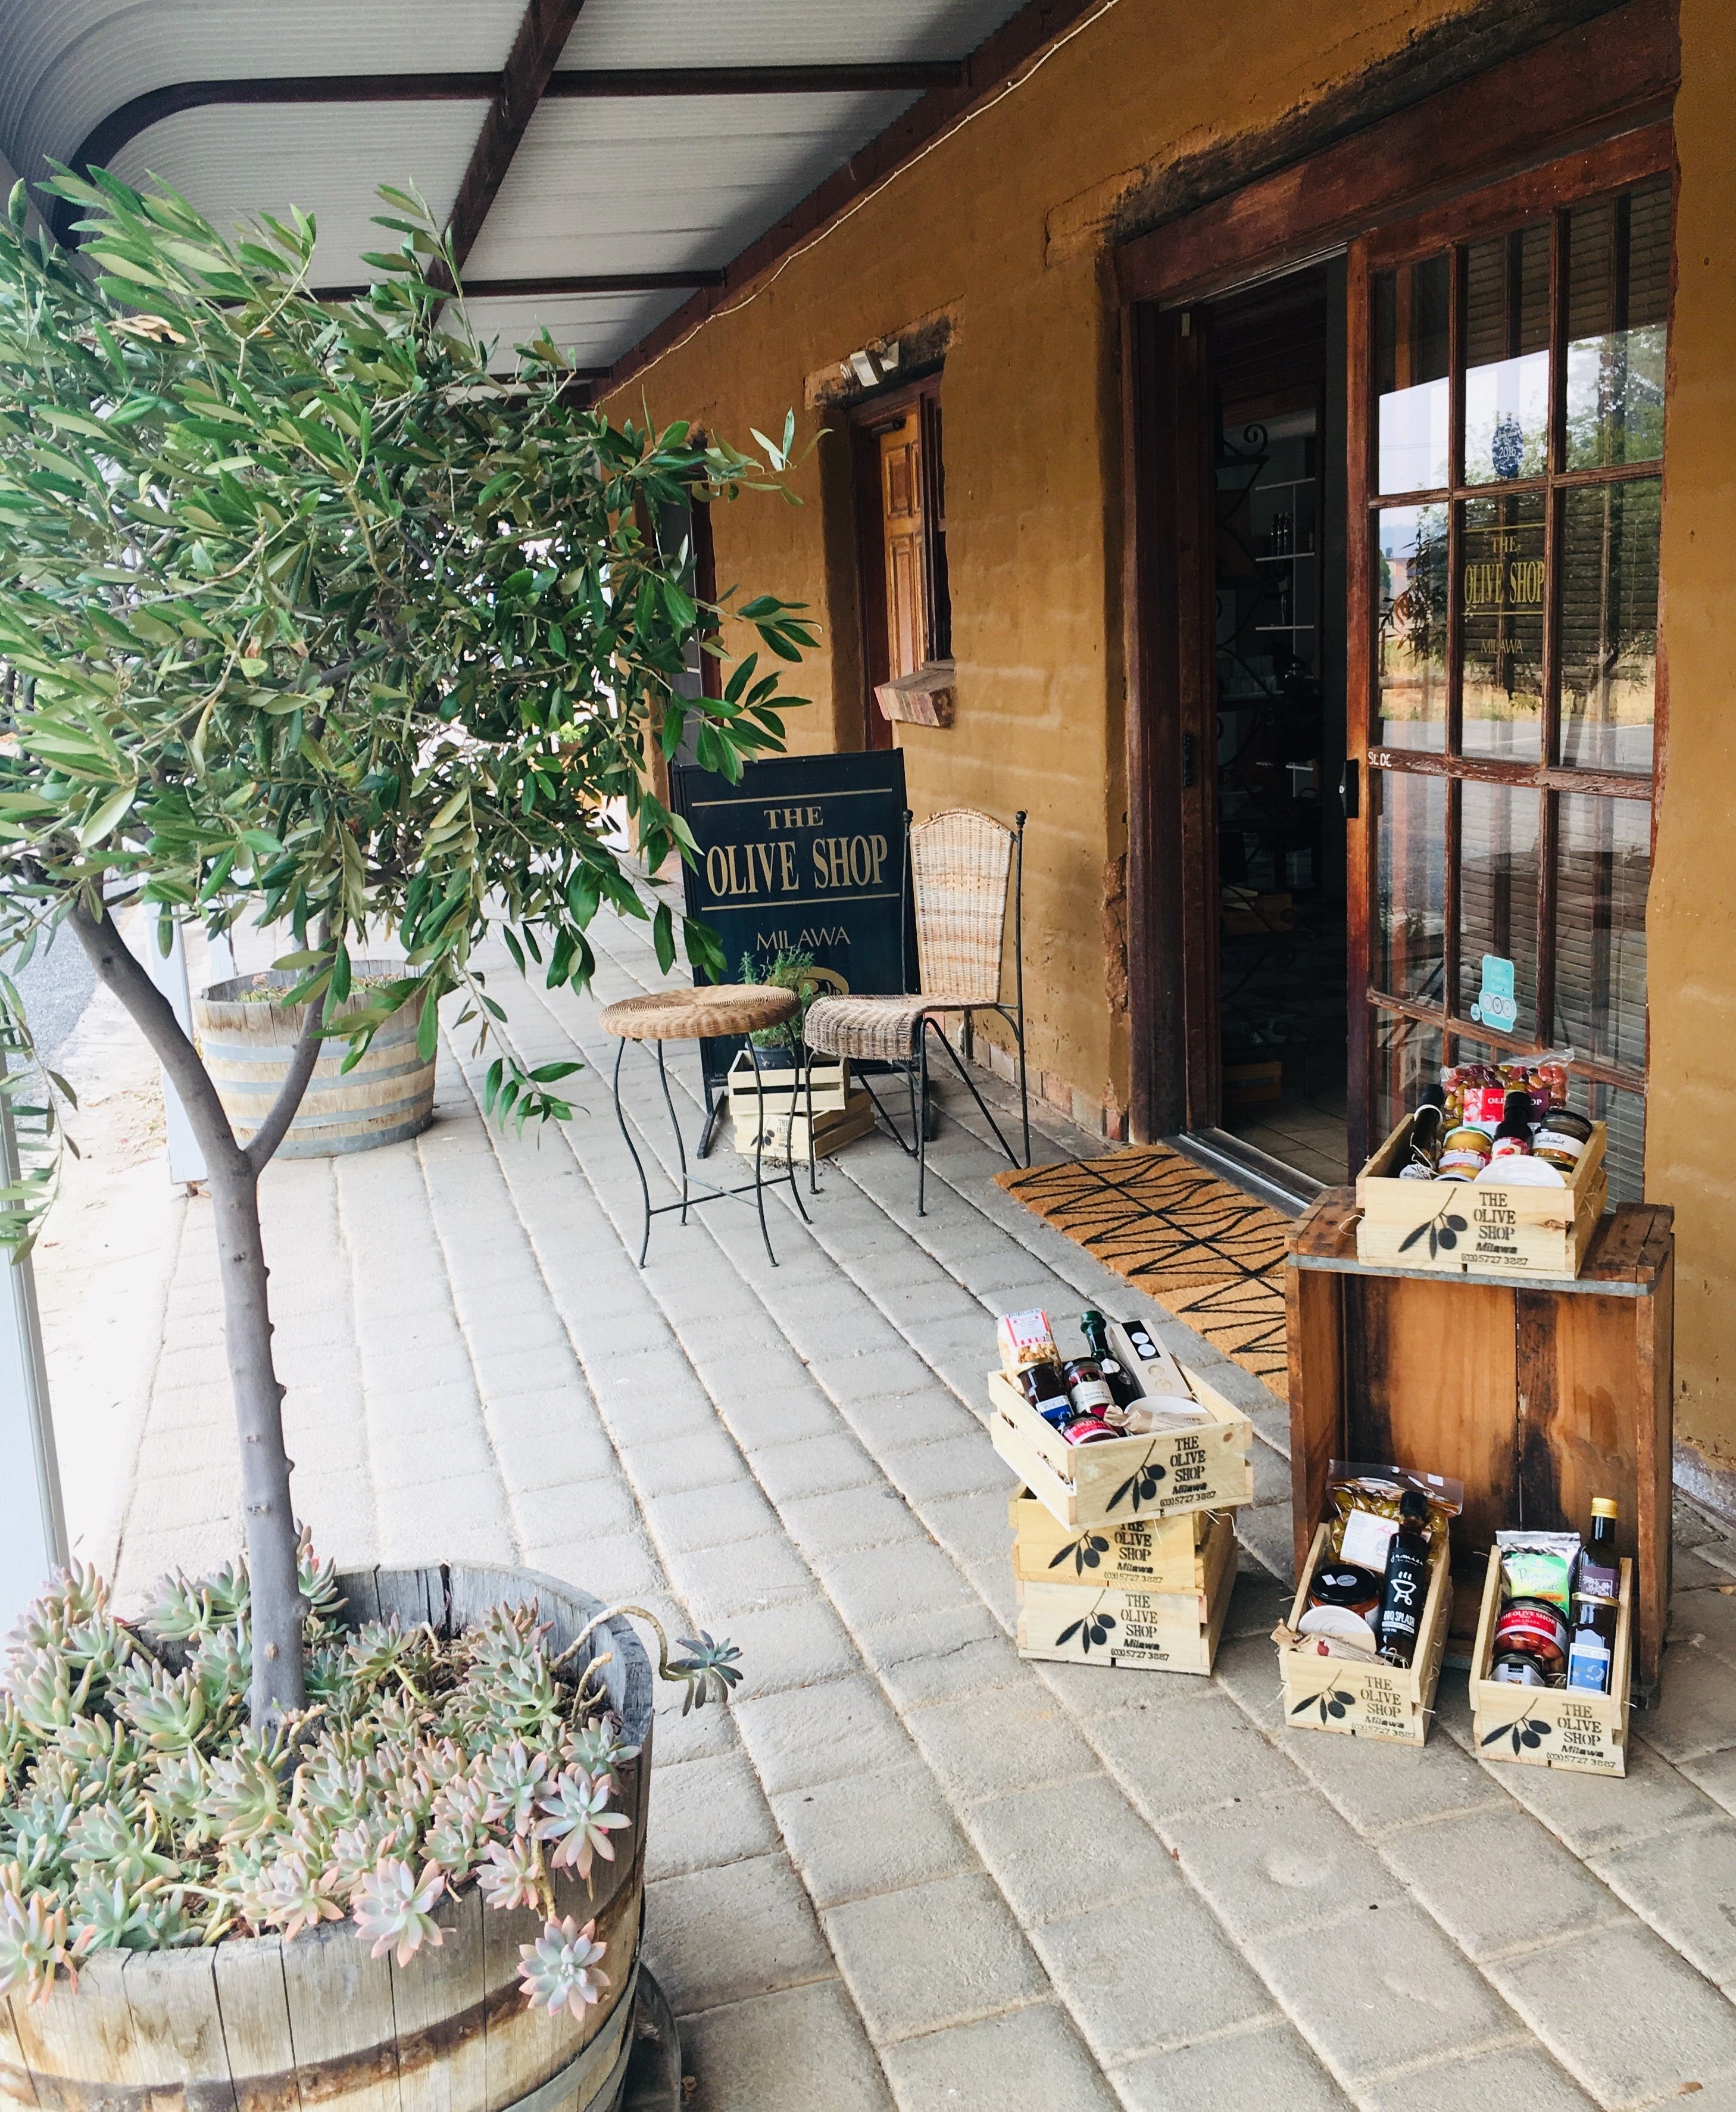 The Olive Shop - Milawa - Tourism Canberra